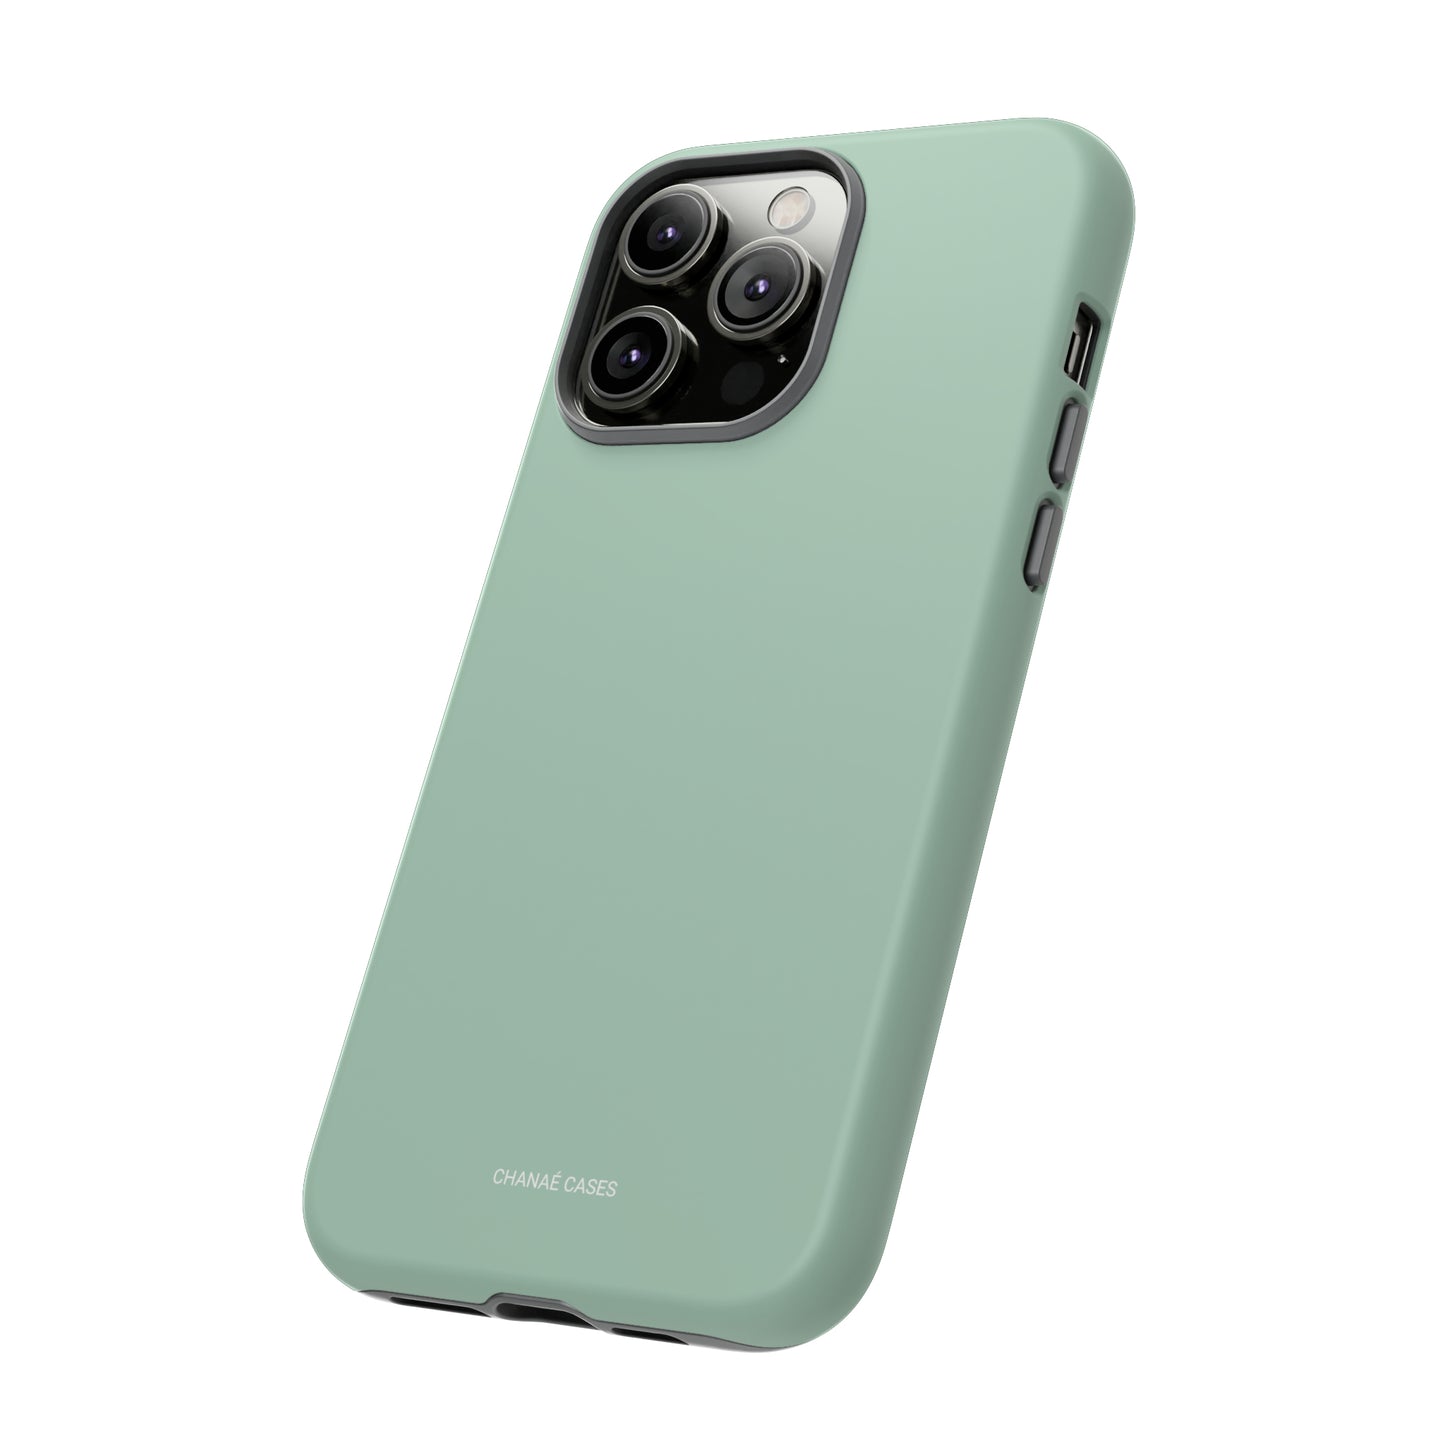 Misty iPhone "Tough" Case (Grayed Jade)